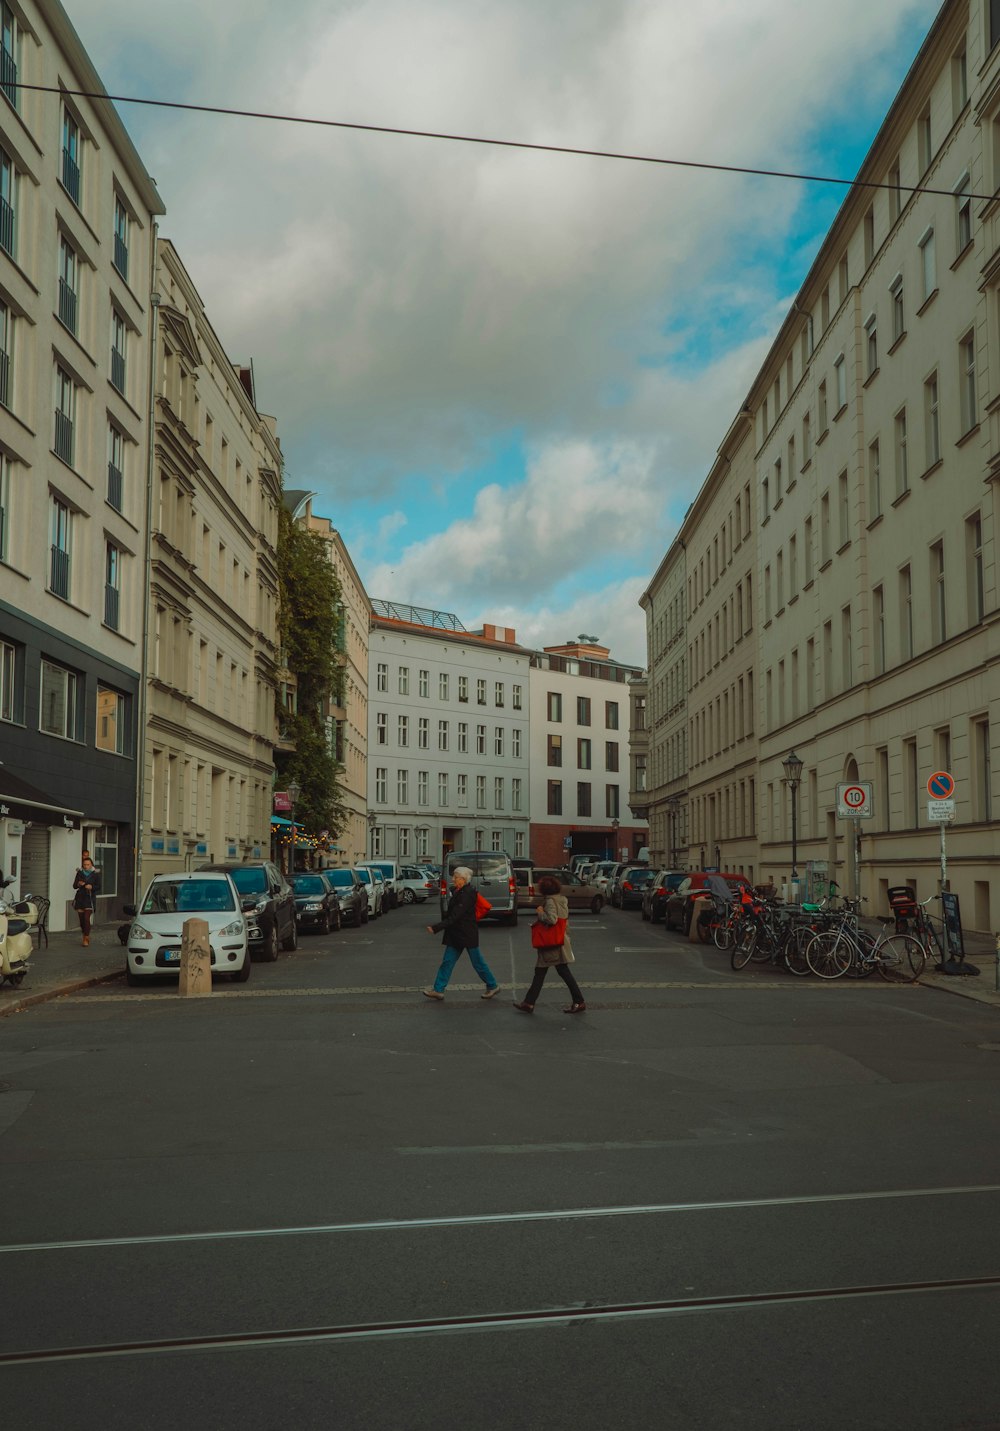 people walking on street near buildings during daytime